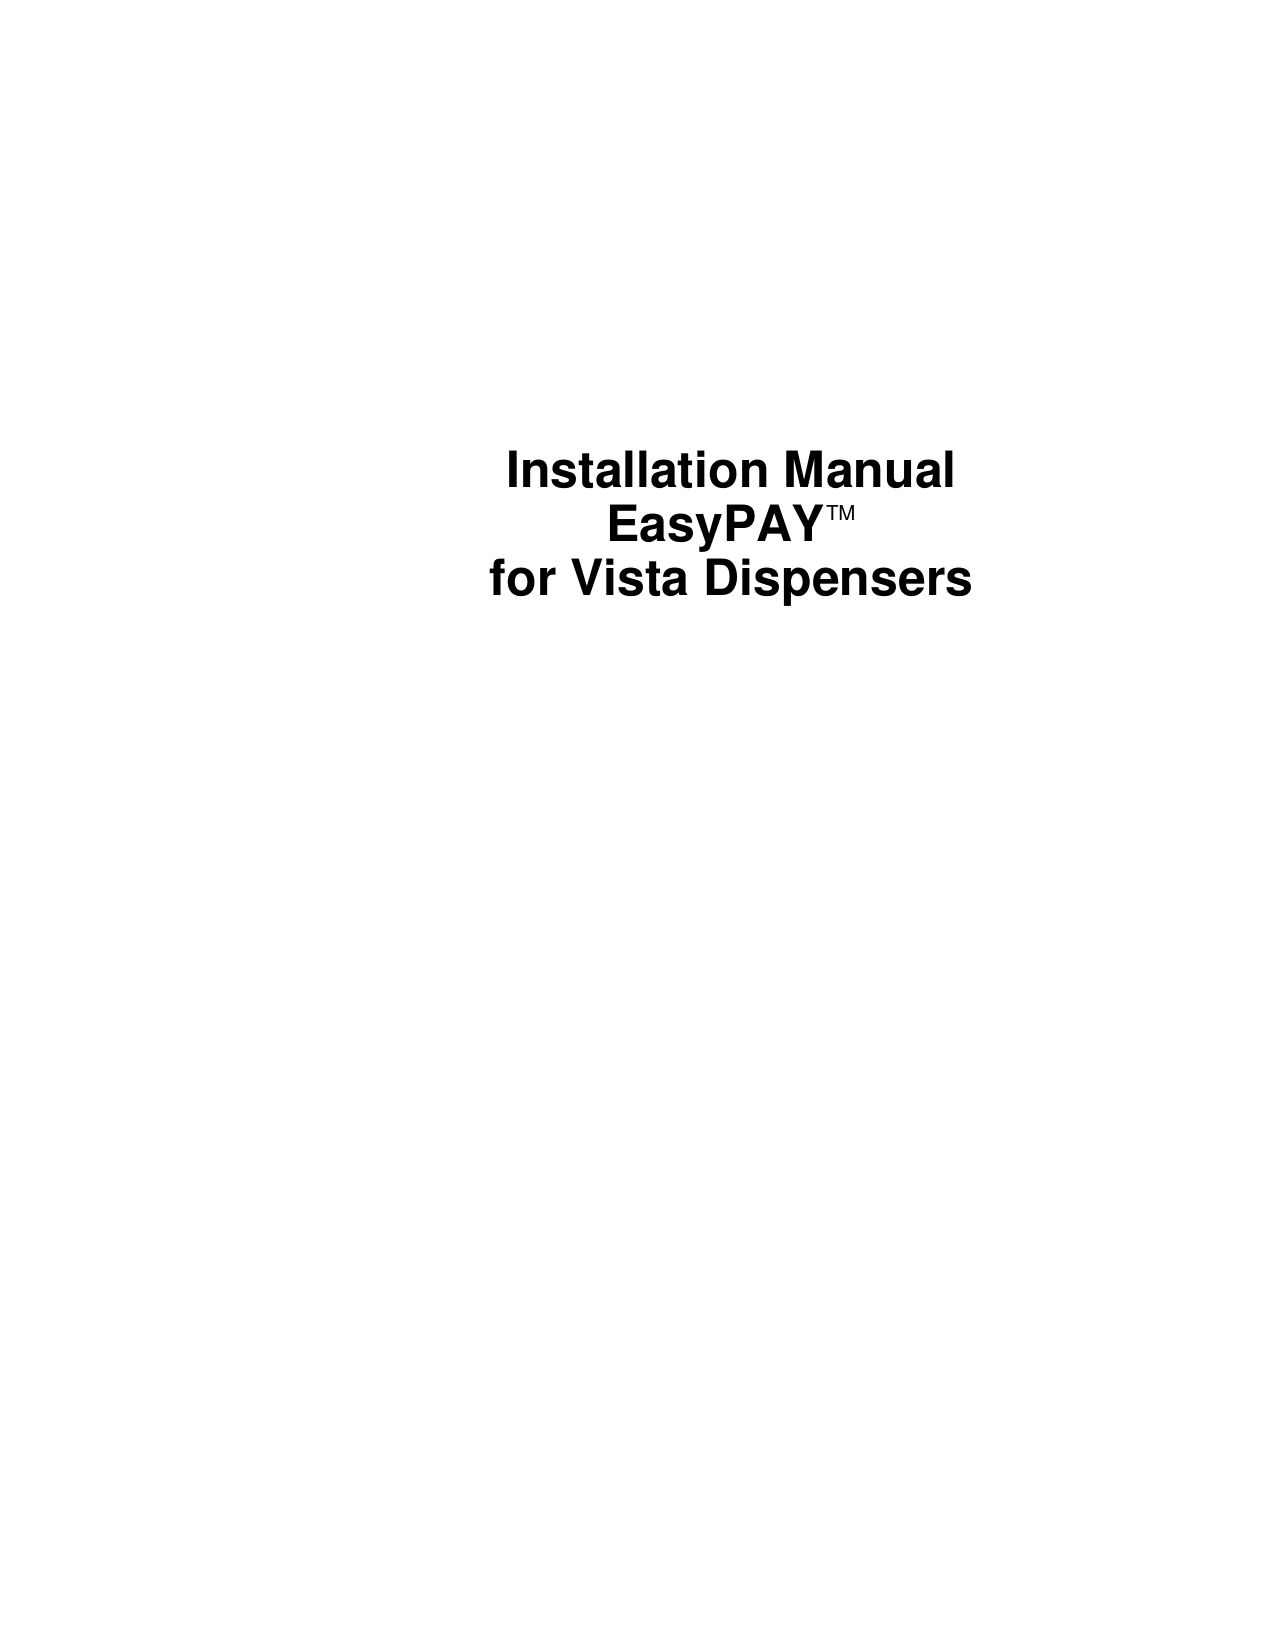 Installation ManualEasyPAYTM for Vista Dispensers 